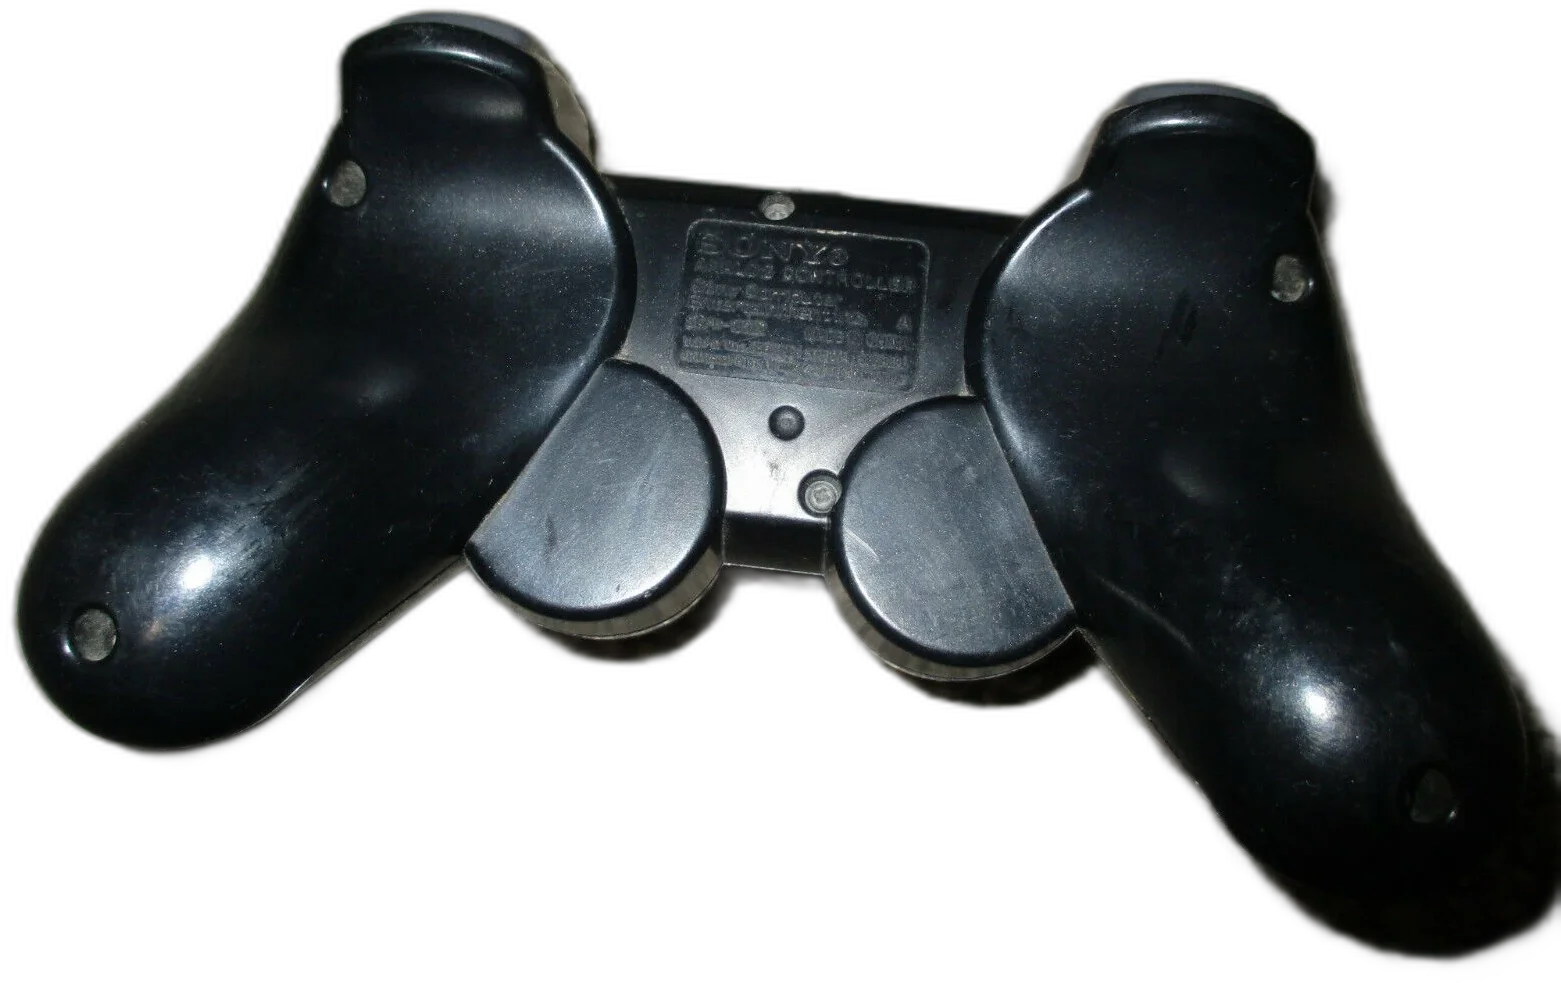  Sony PlayStation 2 Analog Controller [NA]